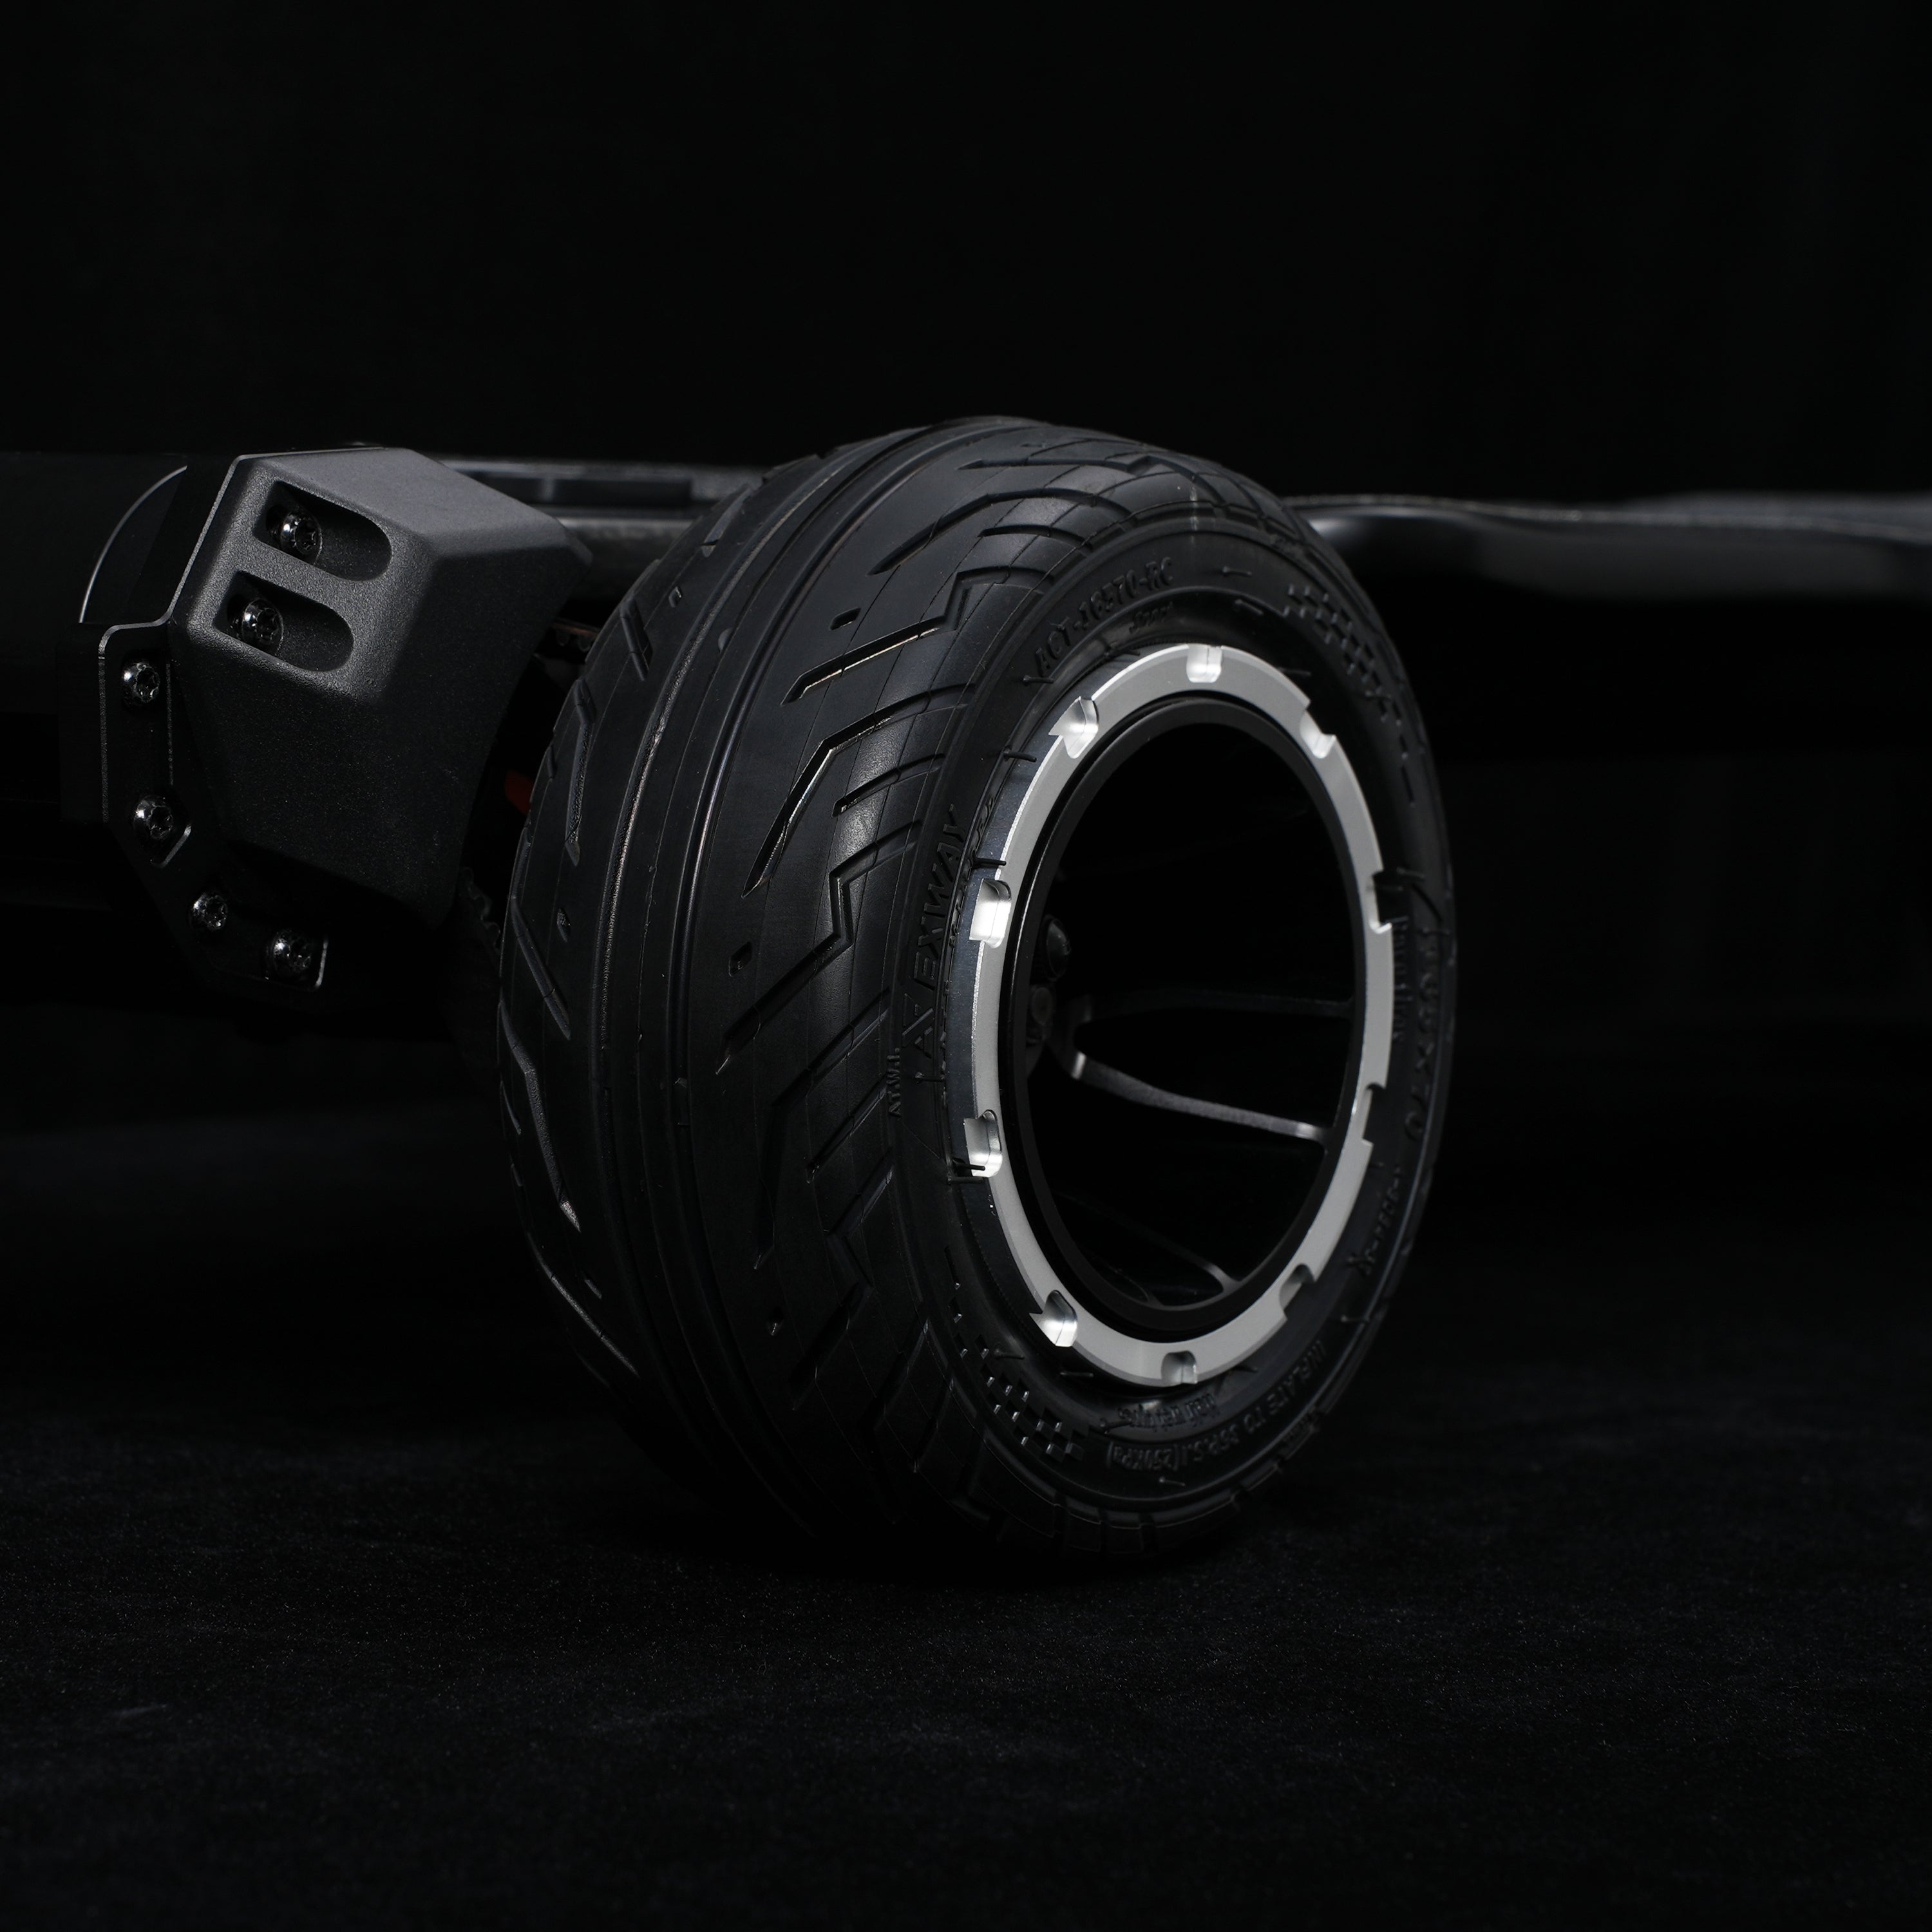 Exway Venator Semi-Slick Competition Tires